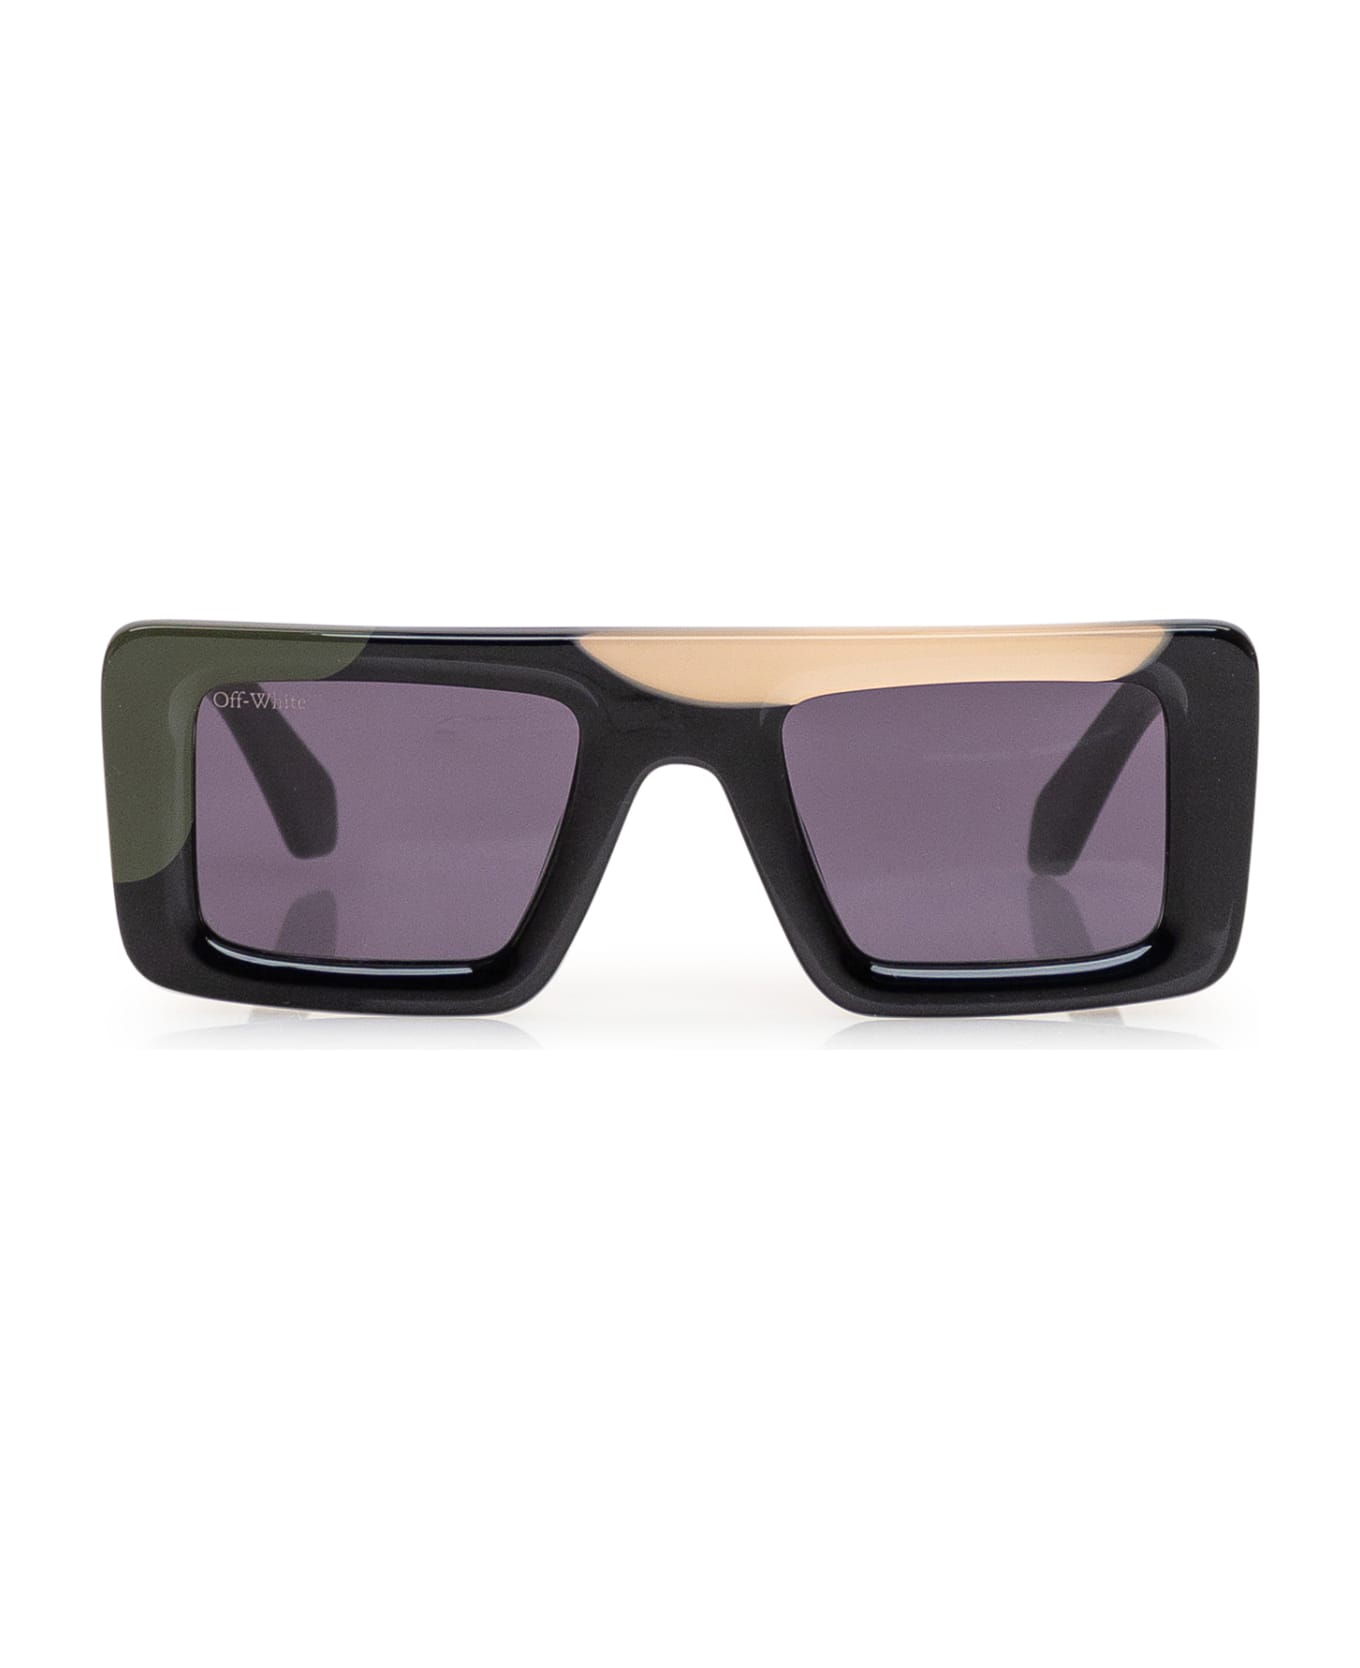 Off-White Seattle Sunglasses - 1207 MULTICOLOR BLACK DARK サングラス